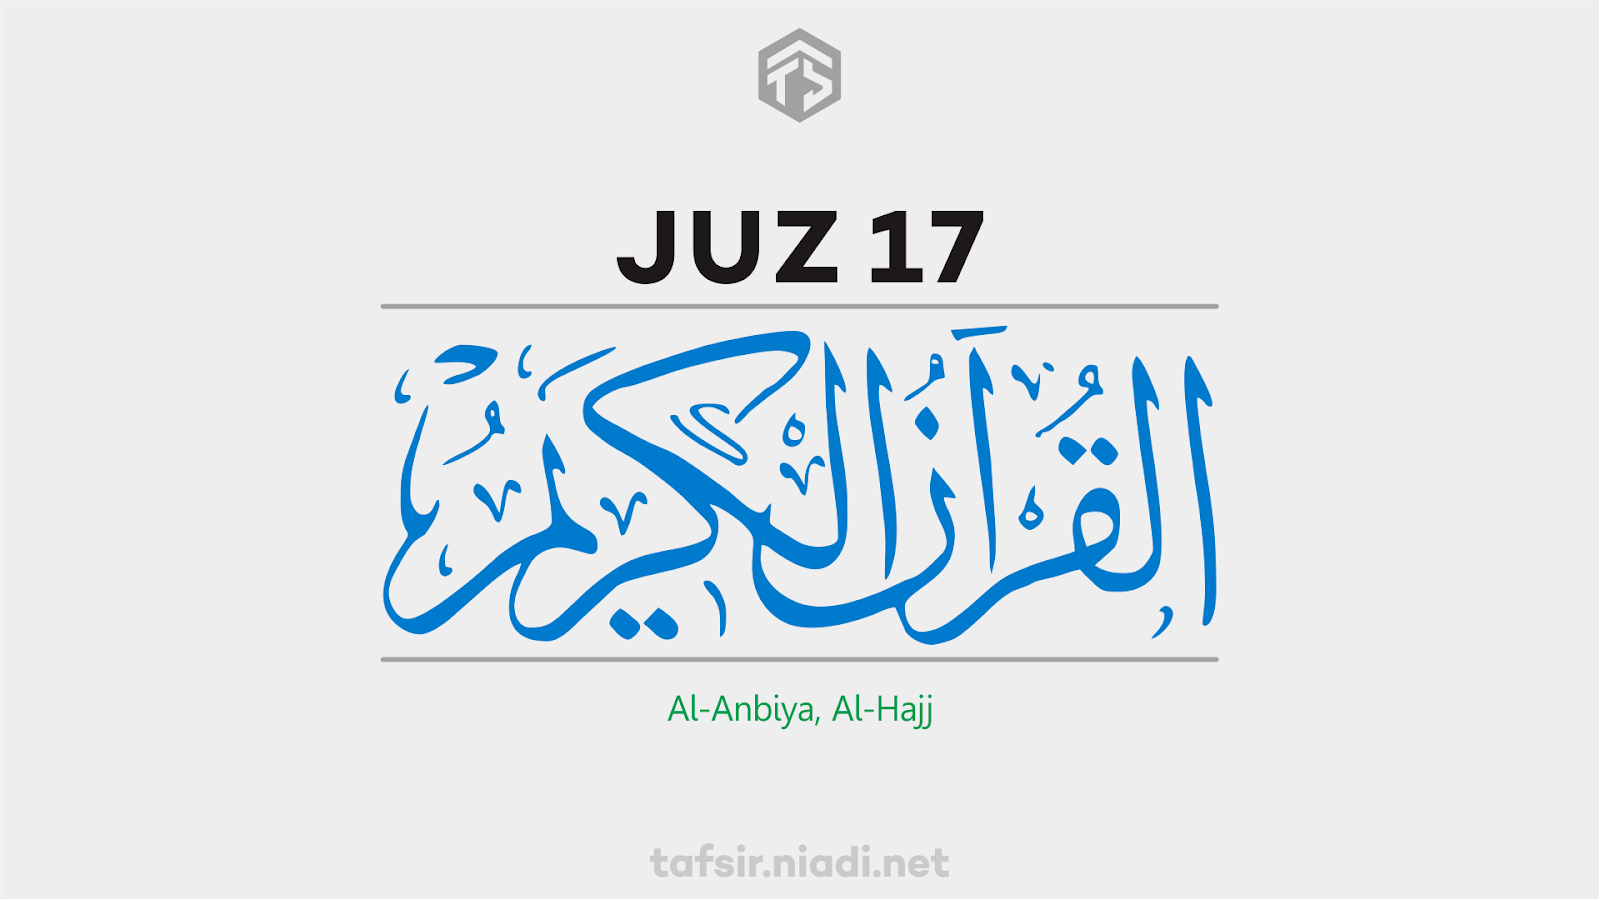 Baca online Alquran Juz 17, Surah Al-Anbiya ayat 1–112, Al-Hajj ayat 1–78. Website Alquran online cepat, ringan, dan hemat kuota, tafsir.niadi.net